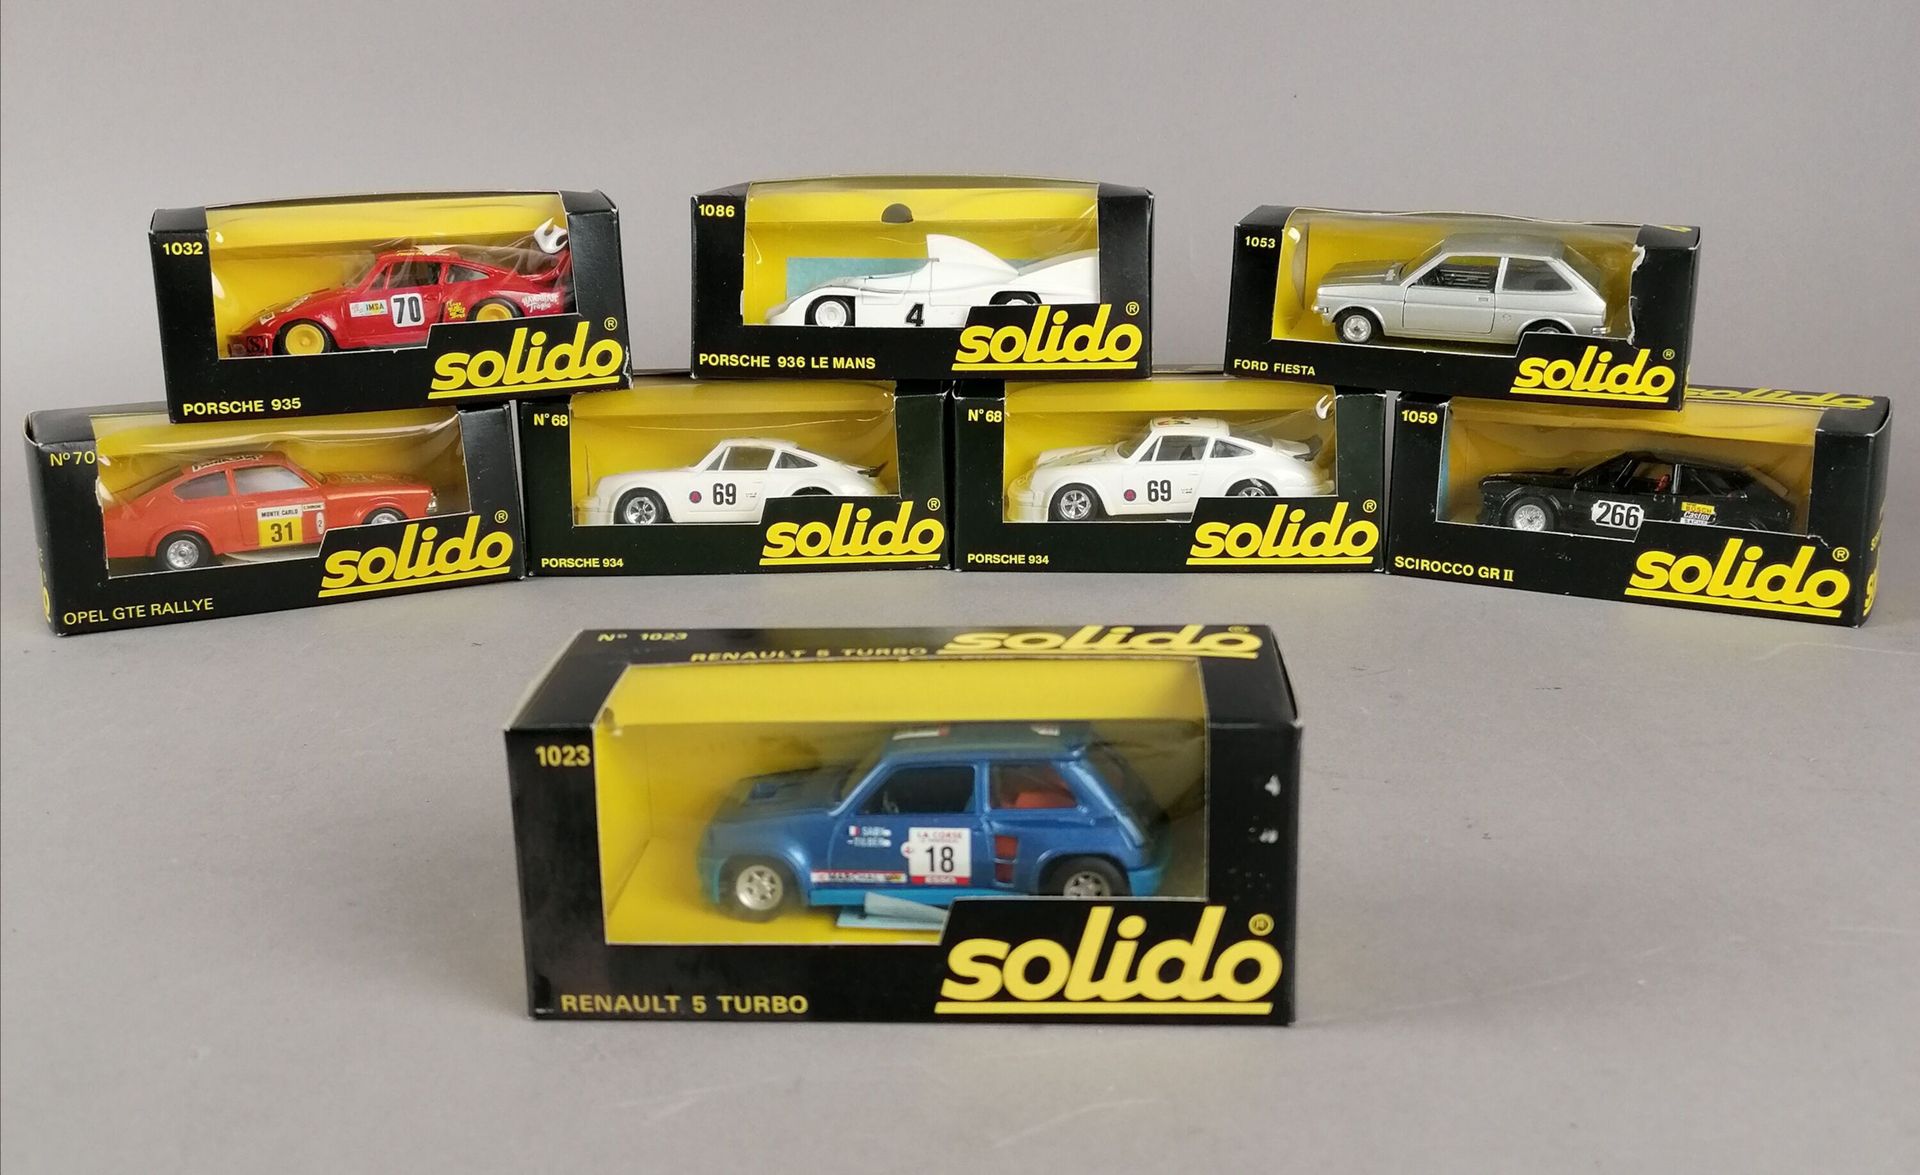 Null SOLIDO - 1/43比例的车辆在其原始包装盒中。

18x保时捷934 n°68

1x 欧宝GTE Rallye n°70

1x Sciro&hellip;